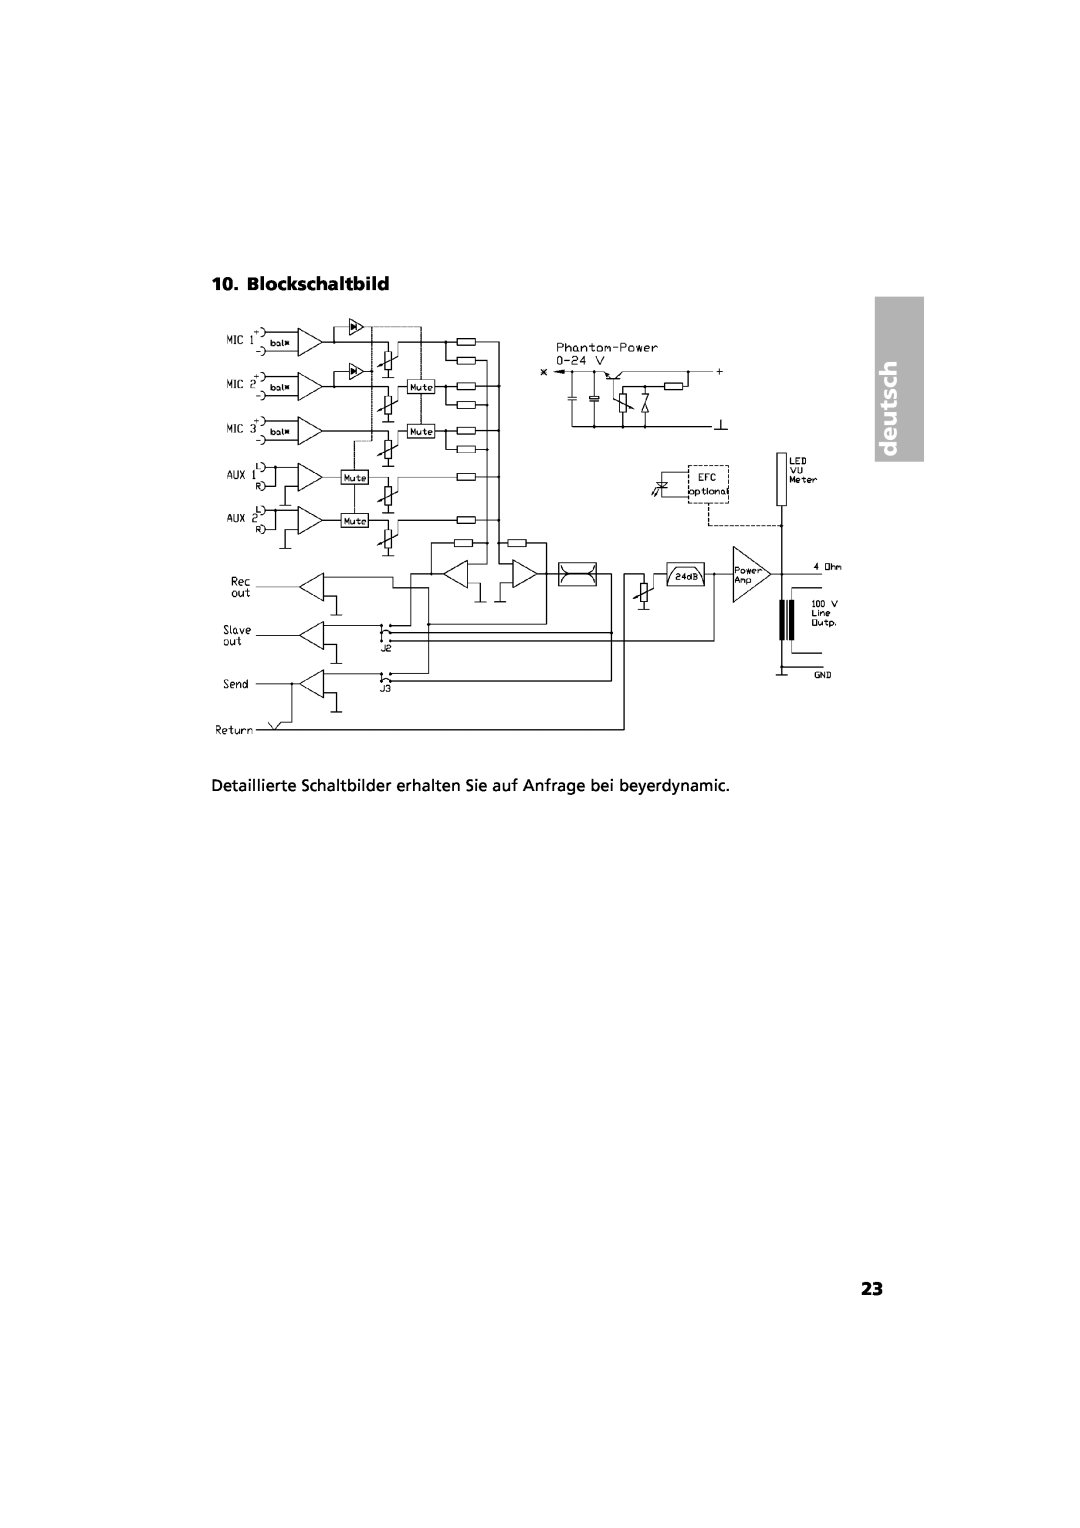 Beyerdynamic MA 206, MA 212 manual deutsch, Blockschaltbild 